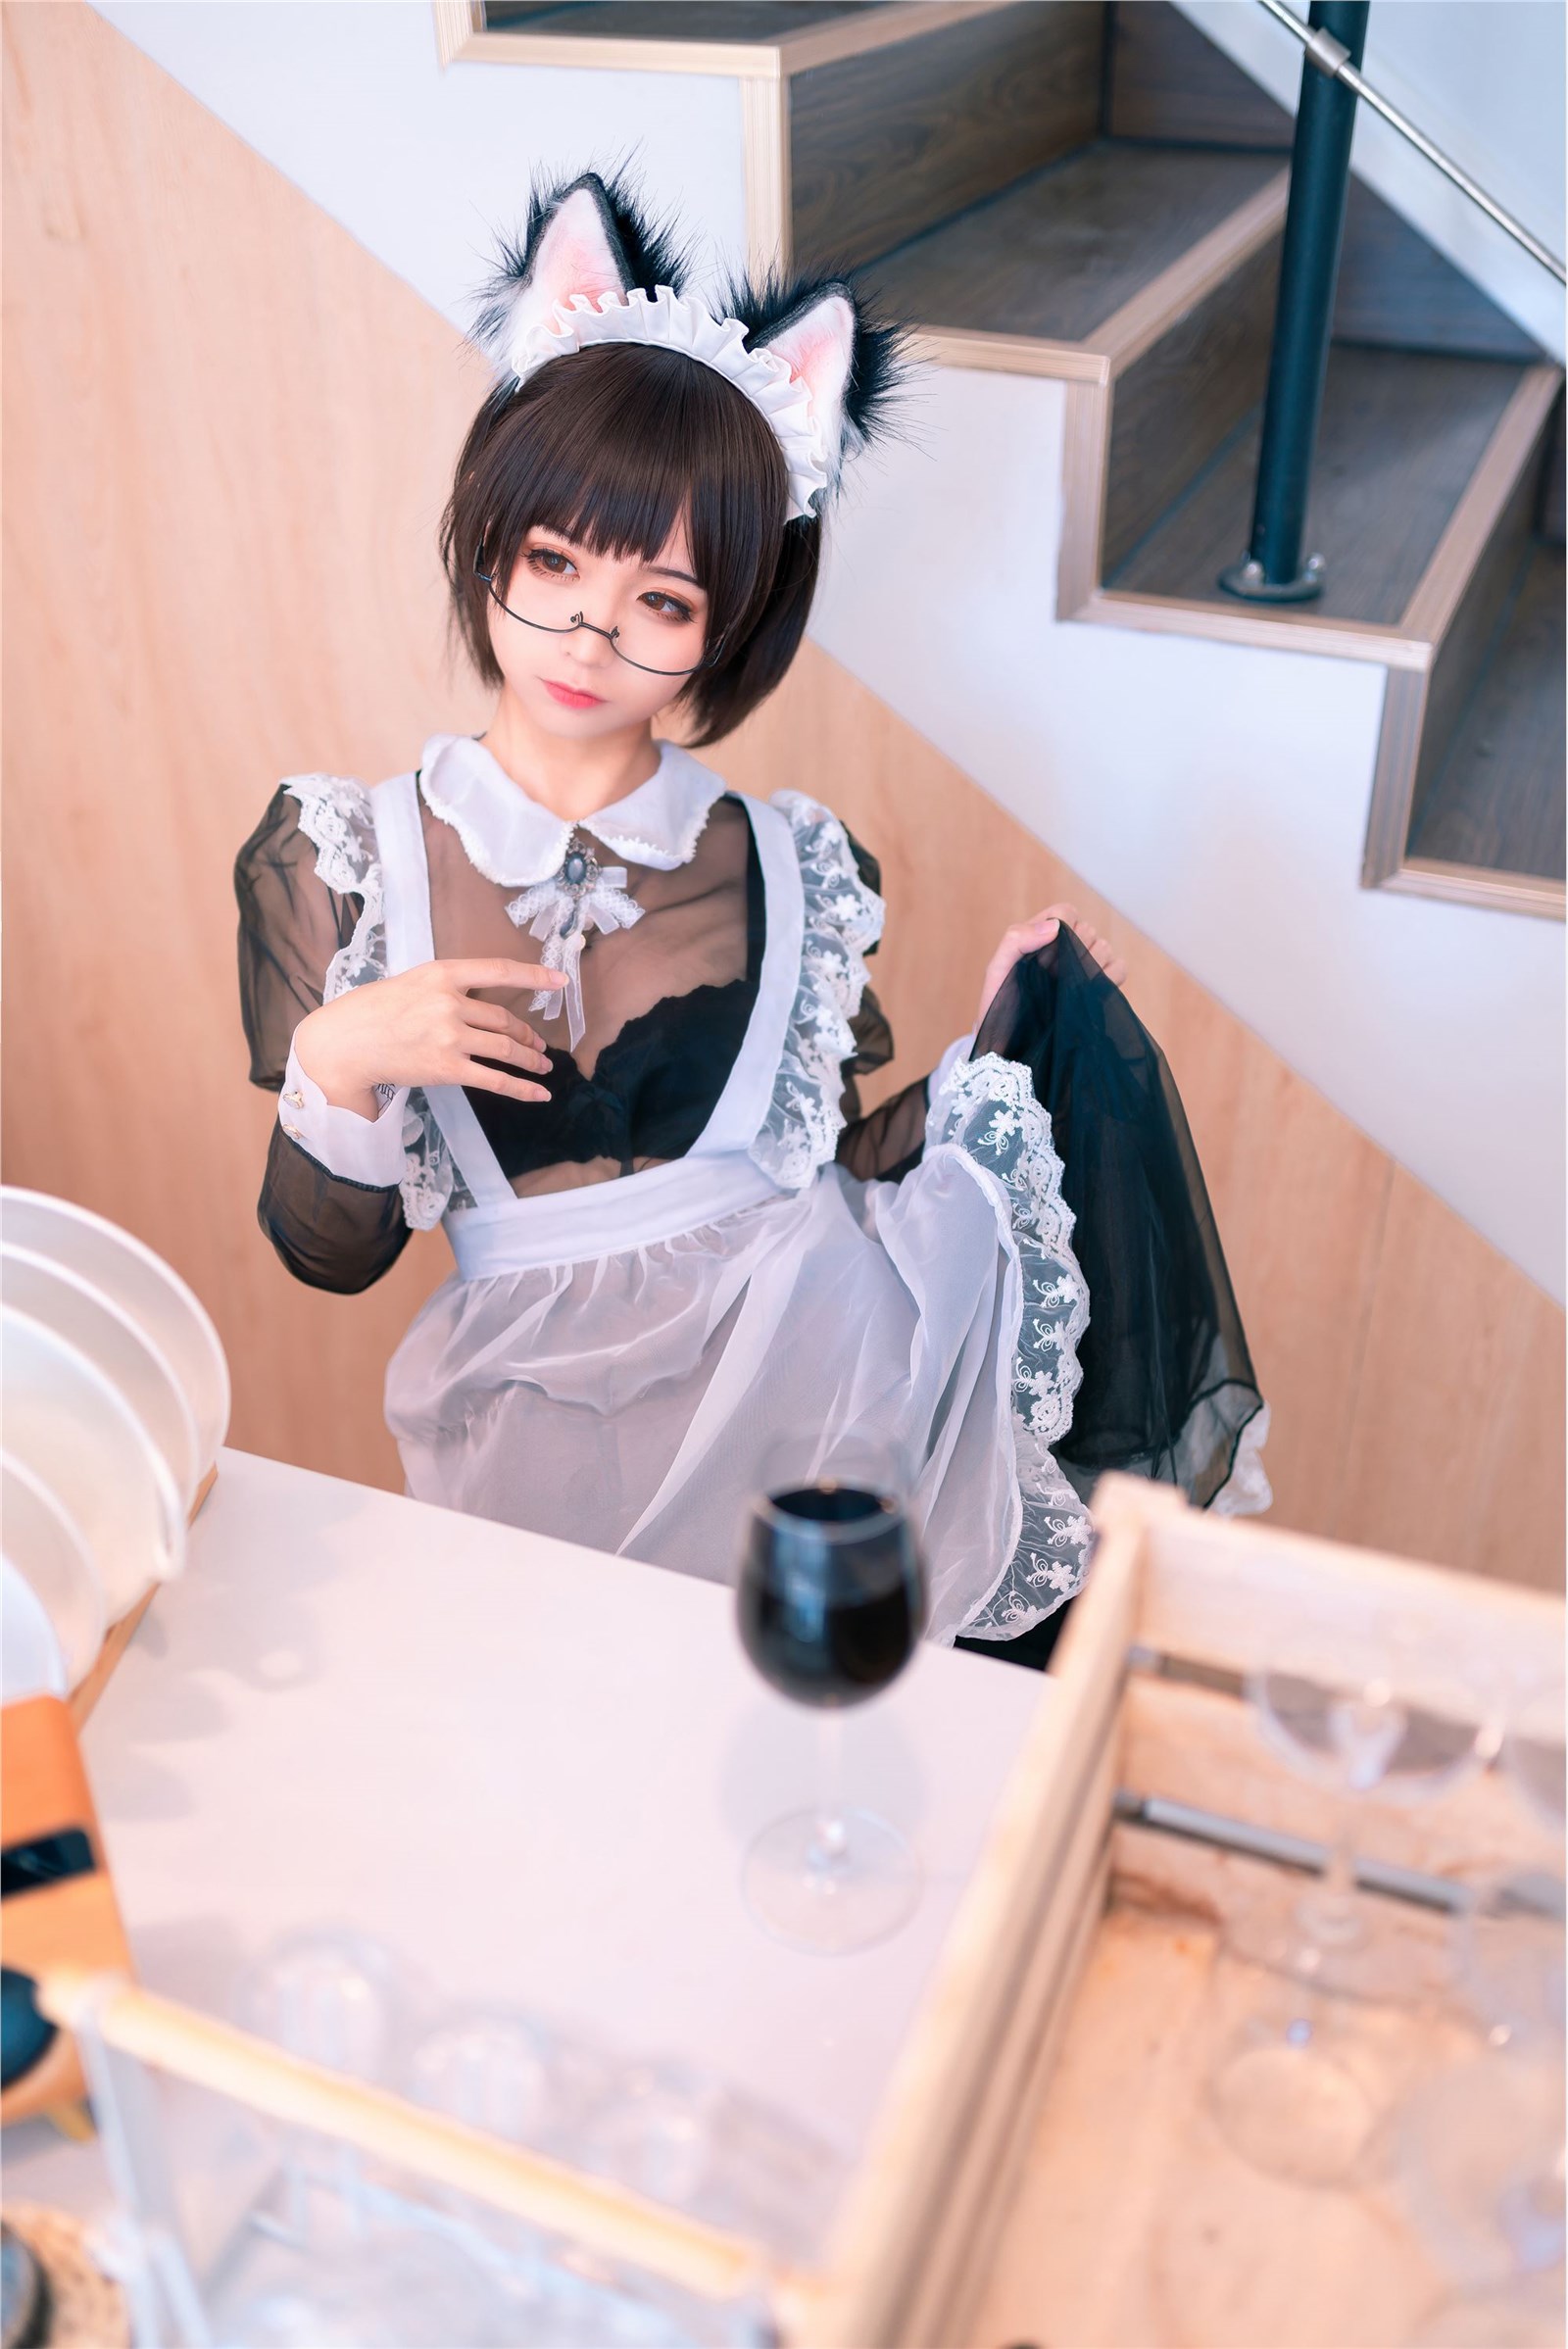 Loli, the stupid foam maid(9)